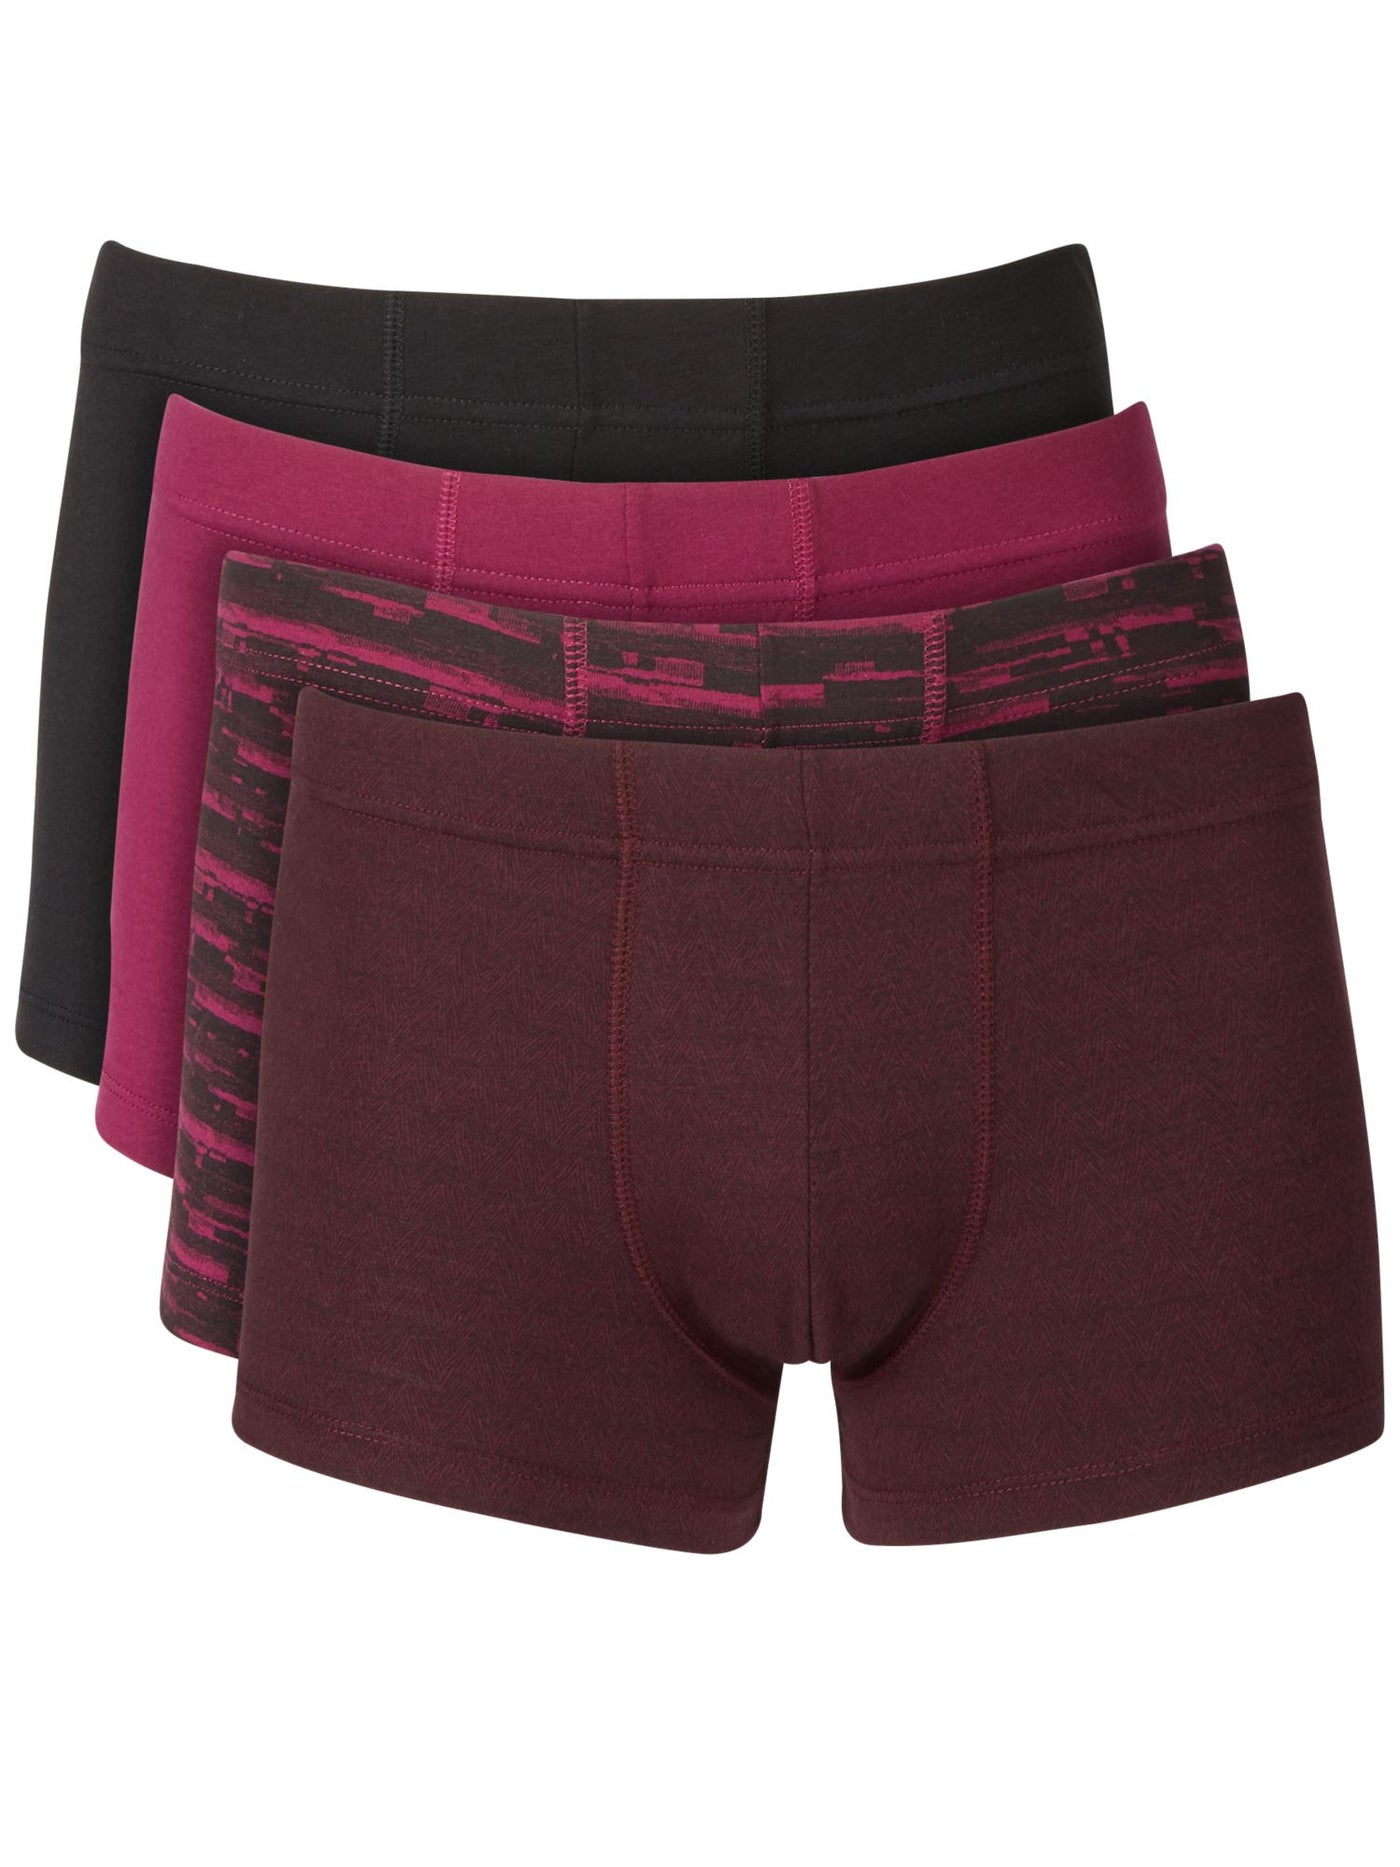 ALFATECH BY ALFANI Intimates 4 Pack Purple Boxer Brief Underwear S